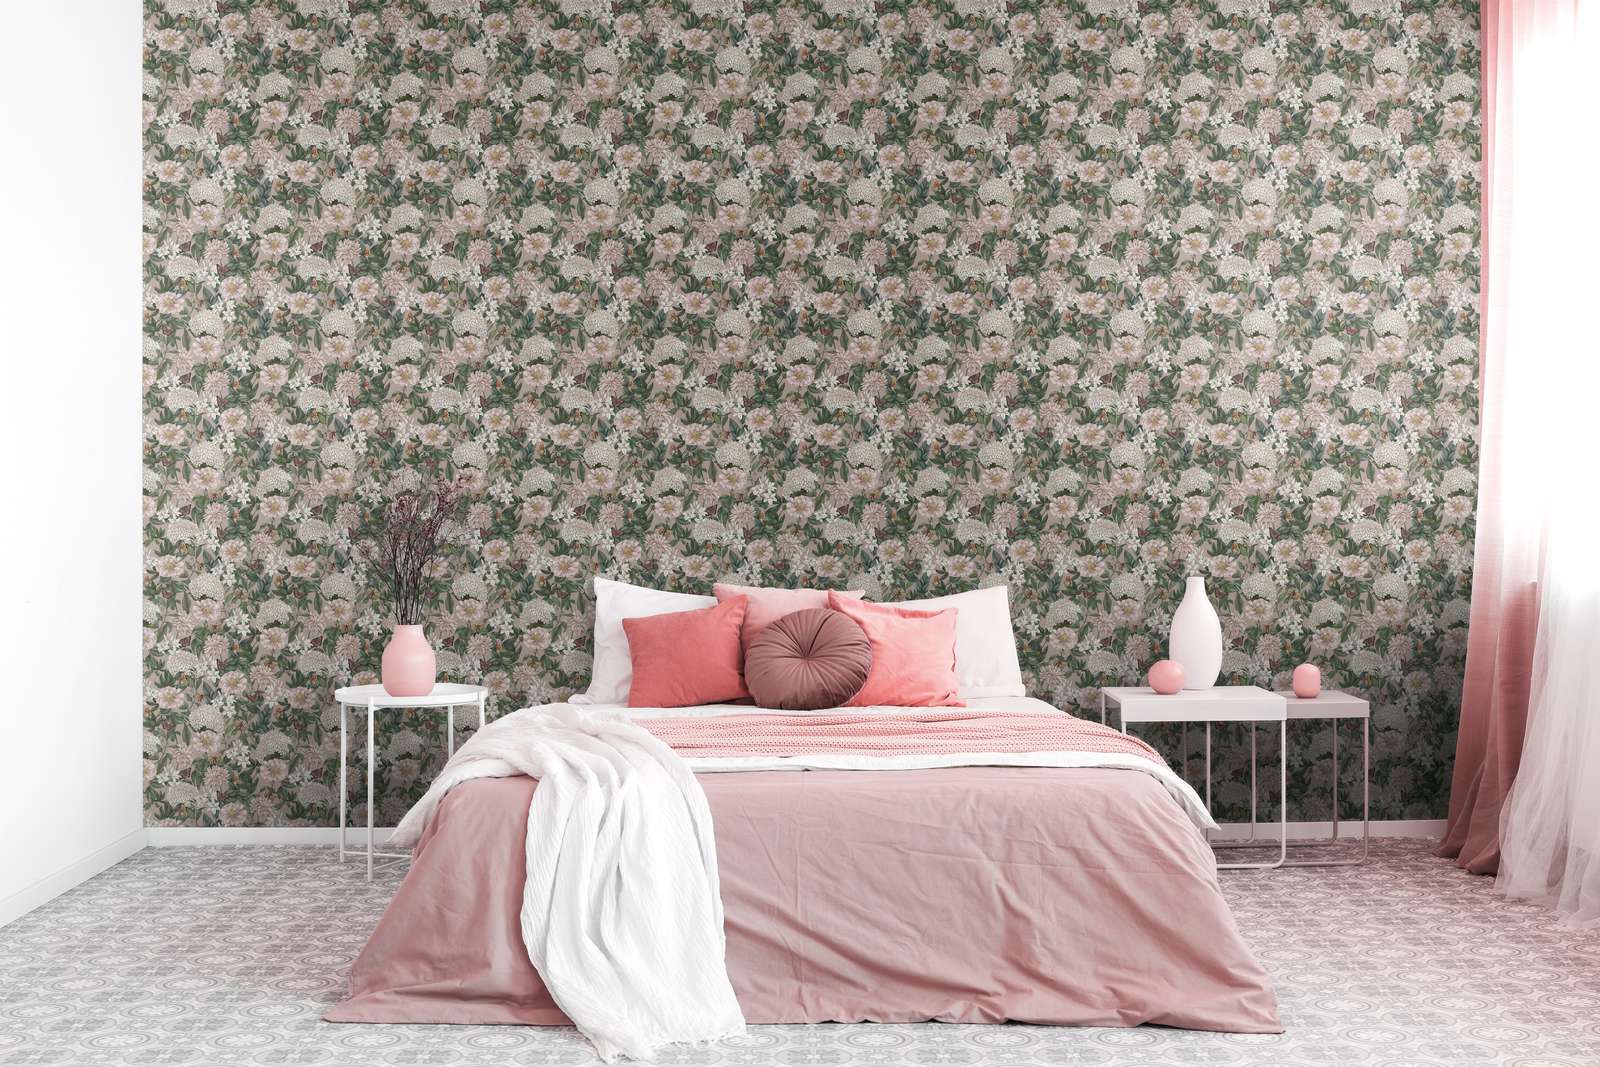             Floral wallpaper modern with animals & flowers textured matt - pink, green, white
        